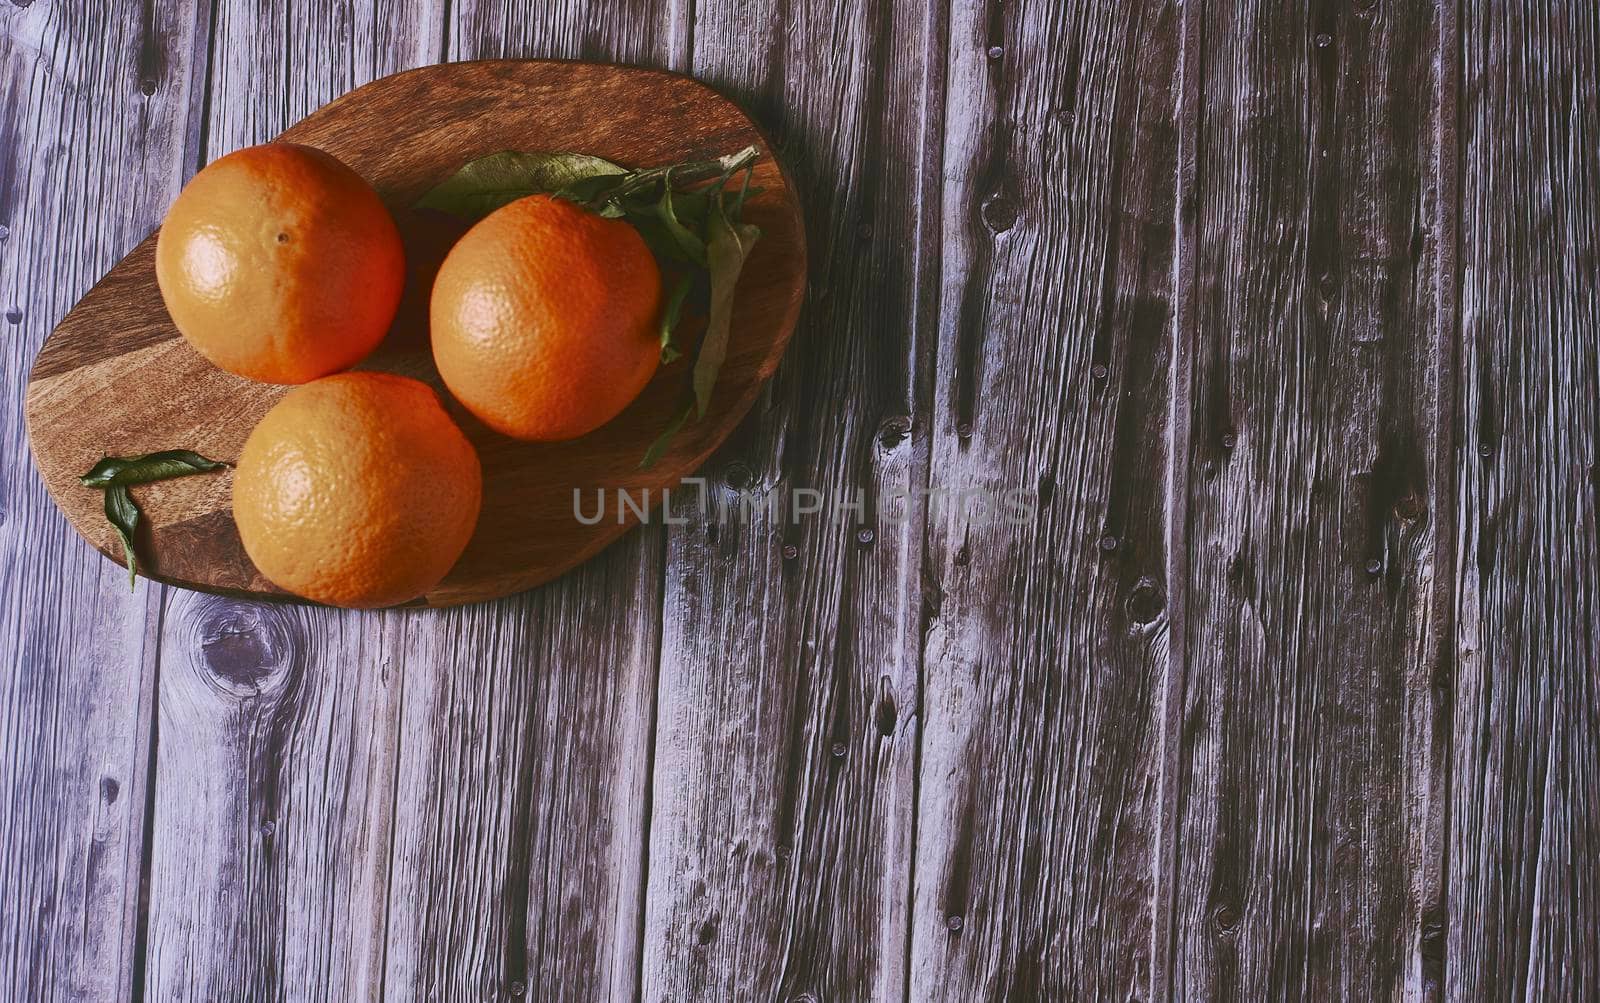 Oranges on wooden floor by raul_ruiz